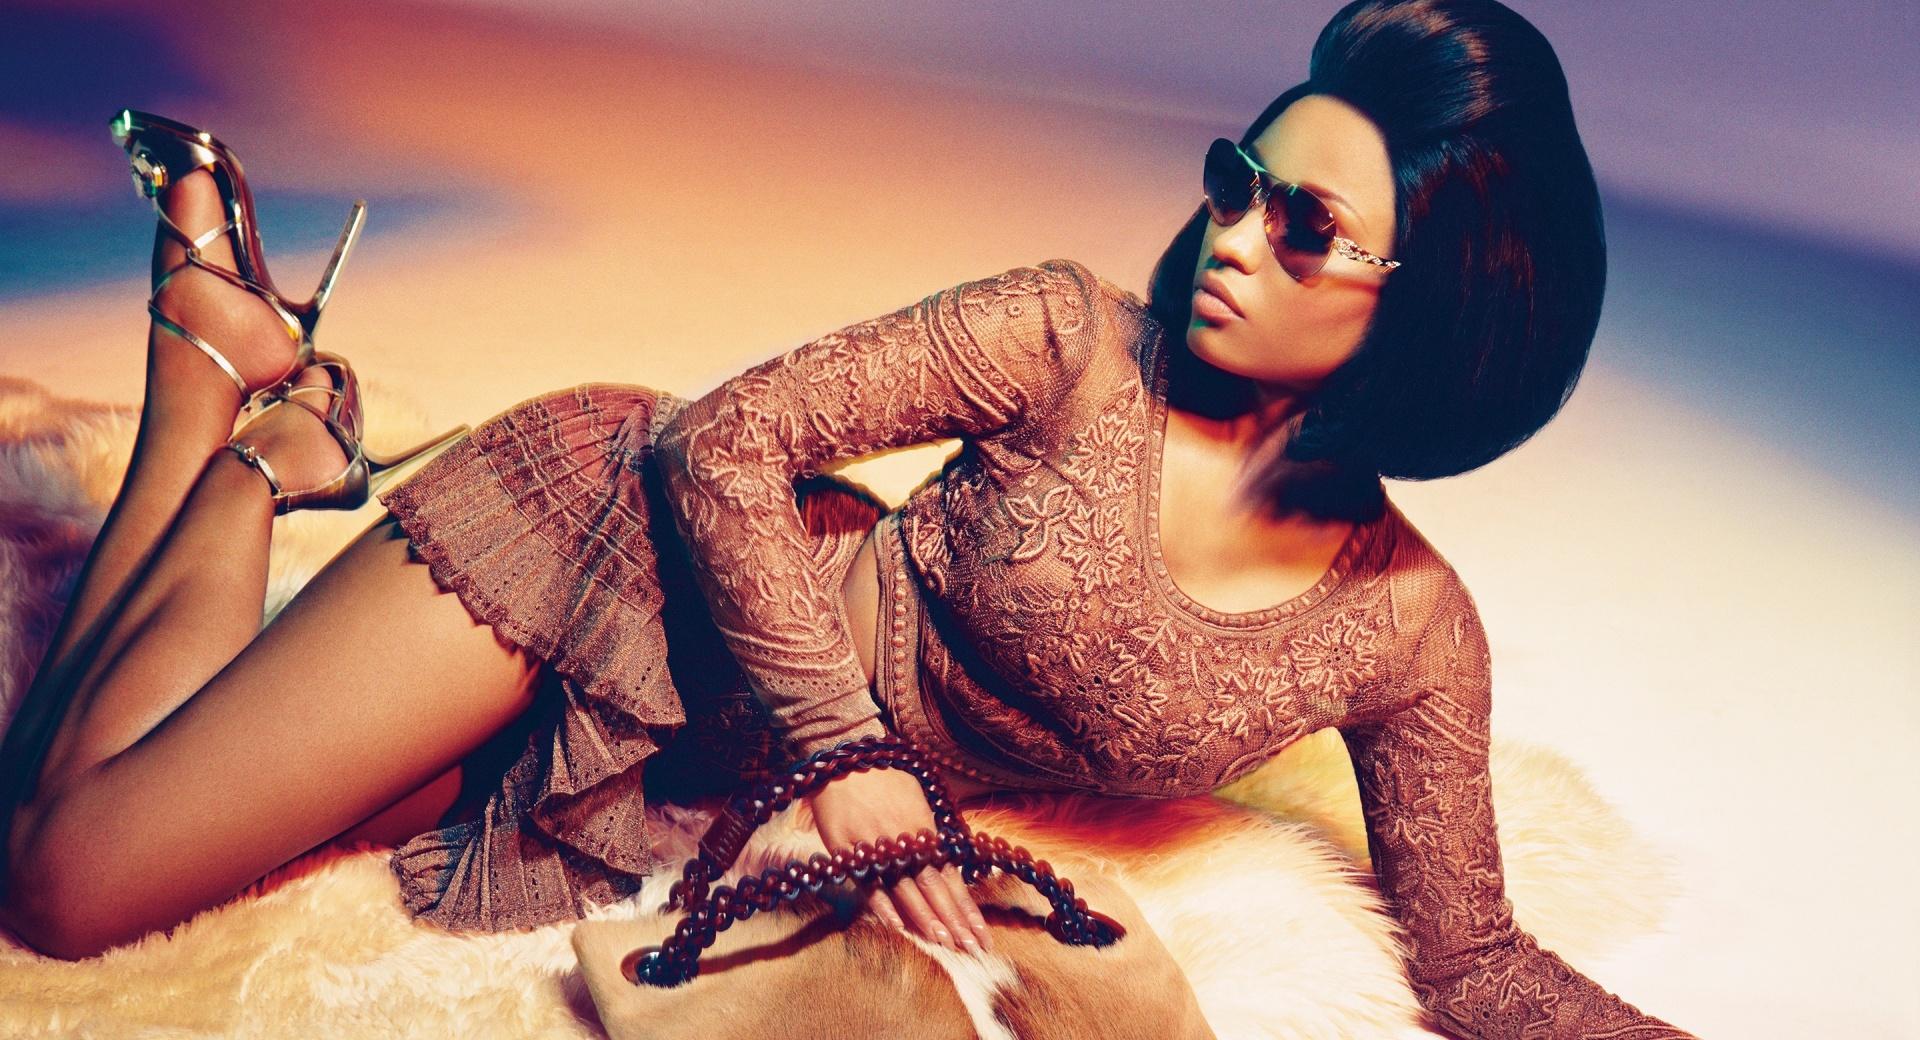 Nicki Minaj Fashion 2015 at 1280 x 960 size wallpapers HD quality